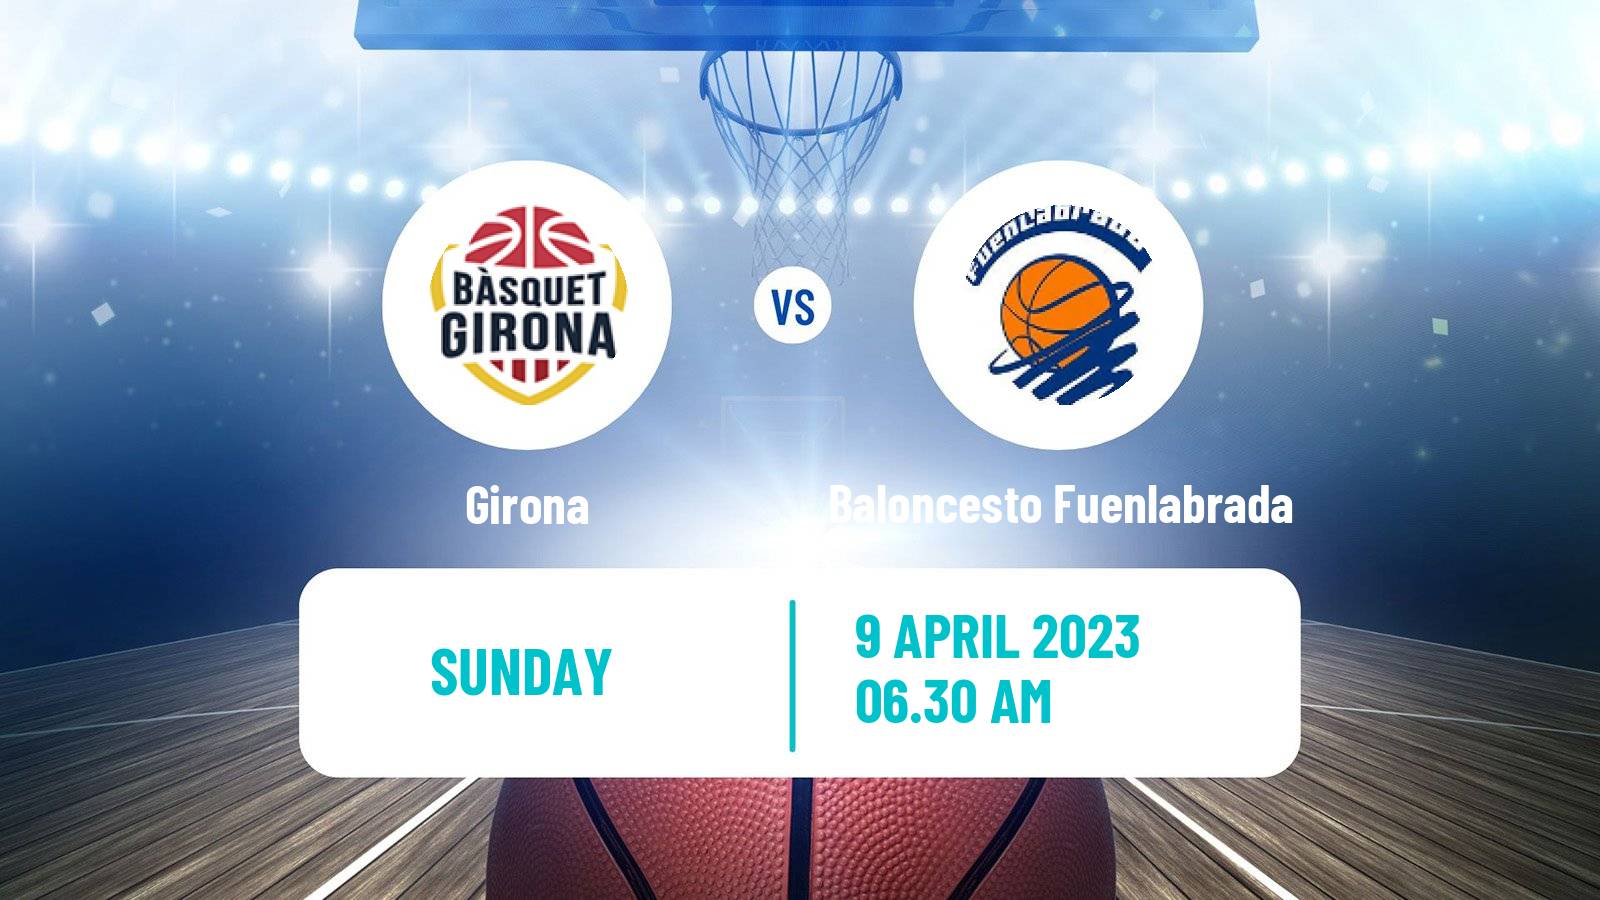 Basketball Spanish ACB League Girona - Baloncesto Fuenlabrada